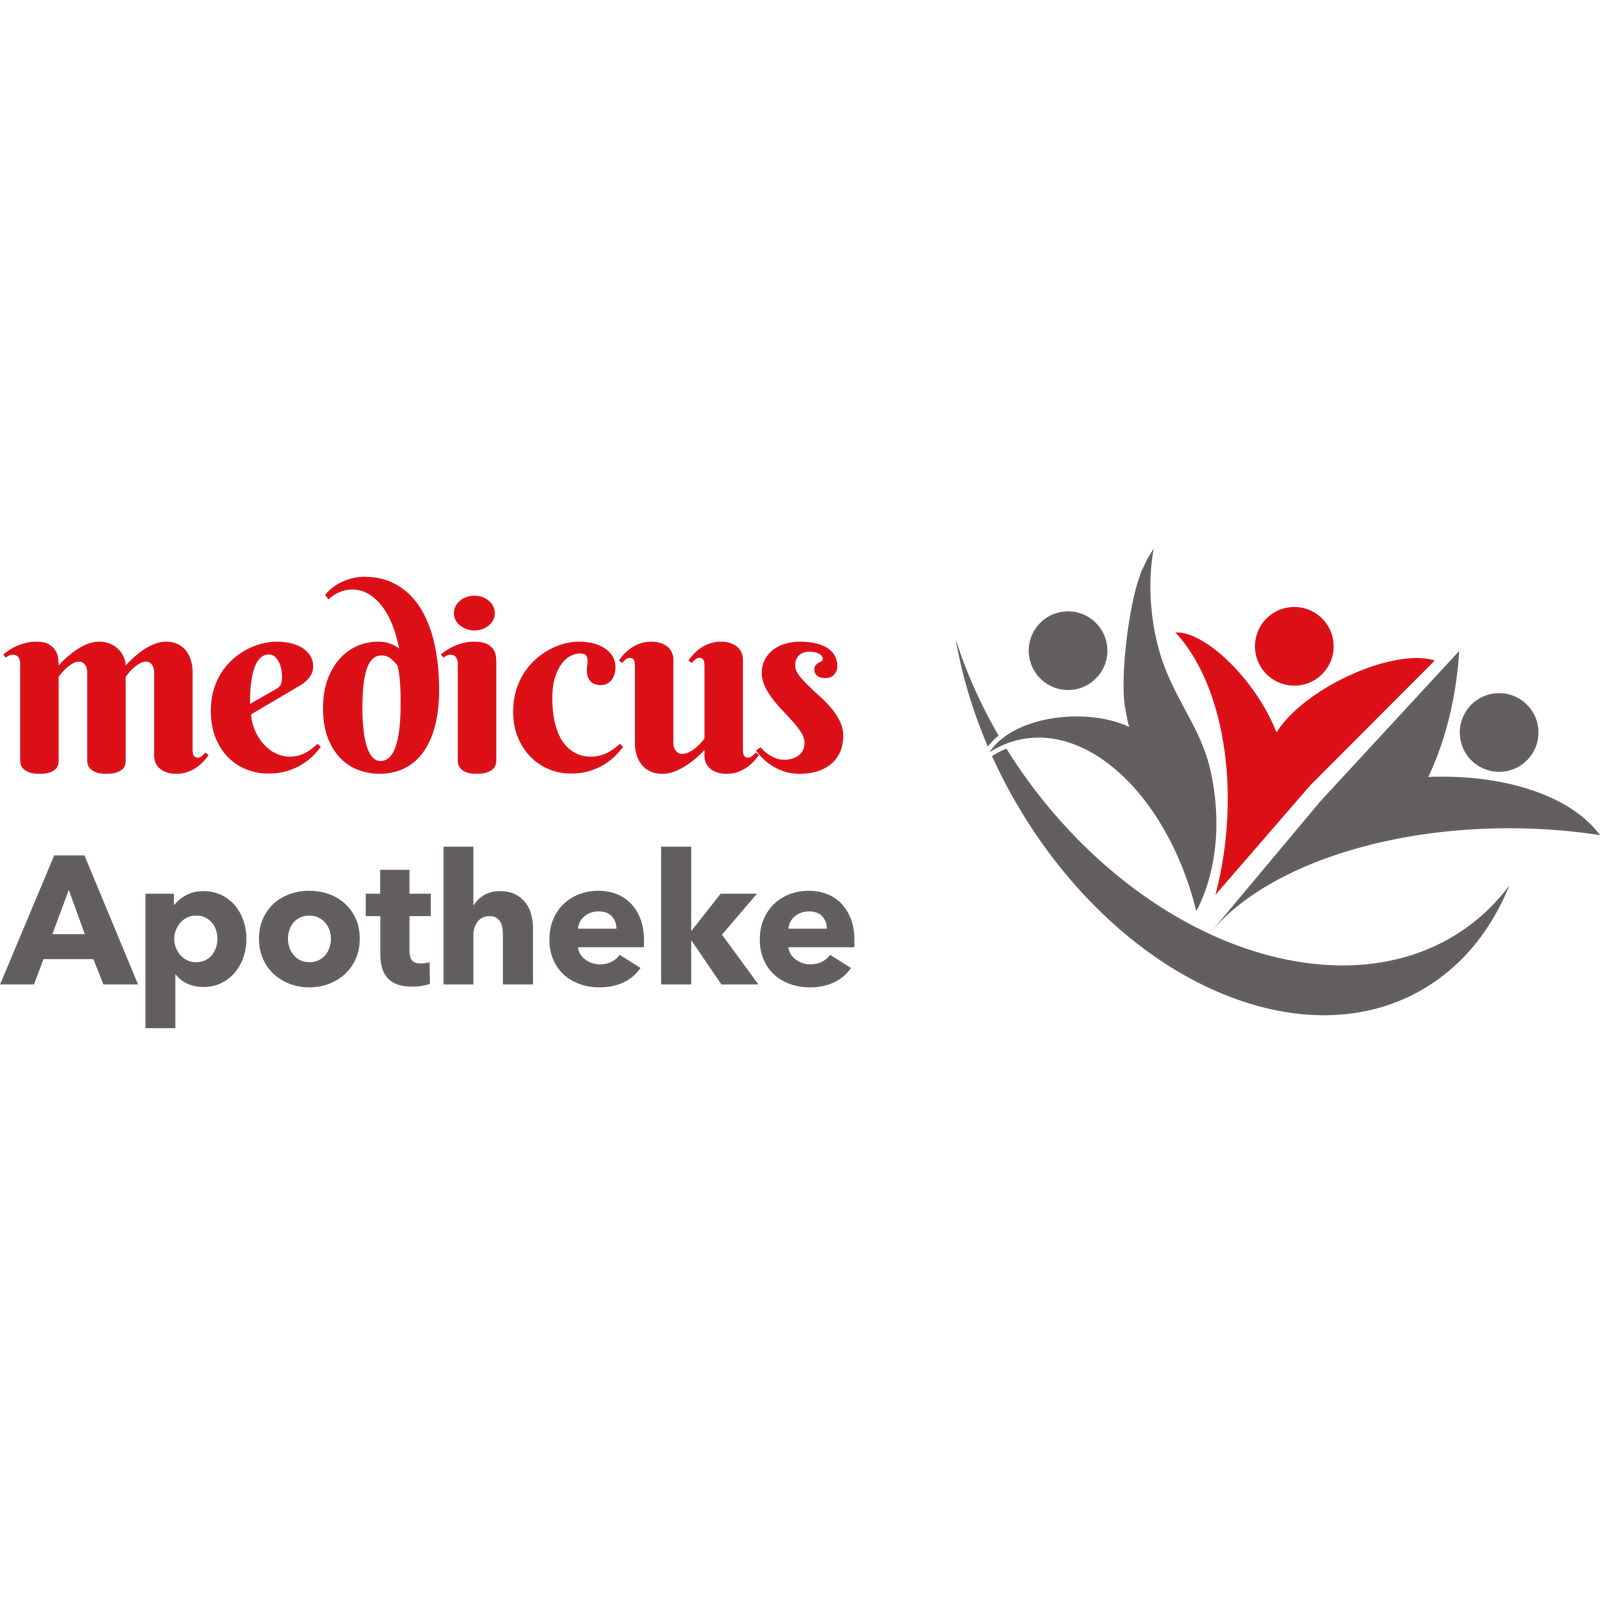 medicus Apotheke in Dortmund - Logo